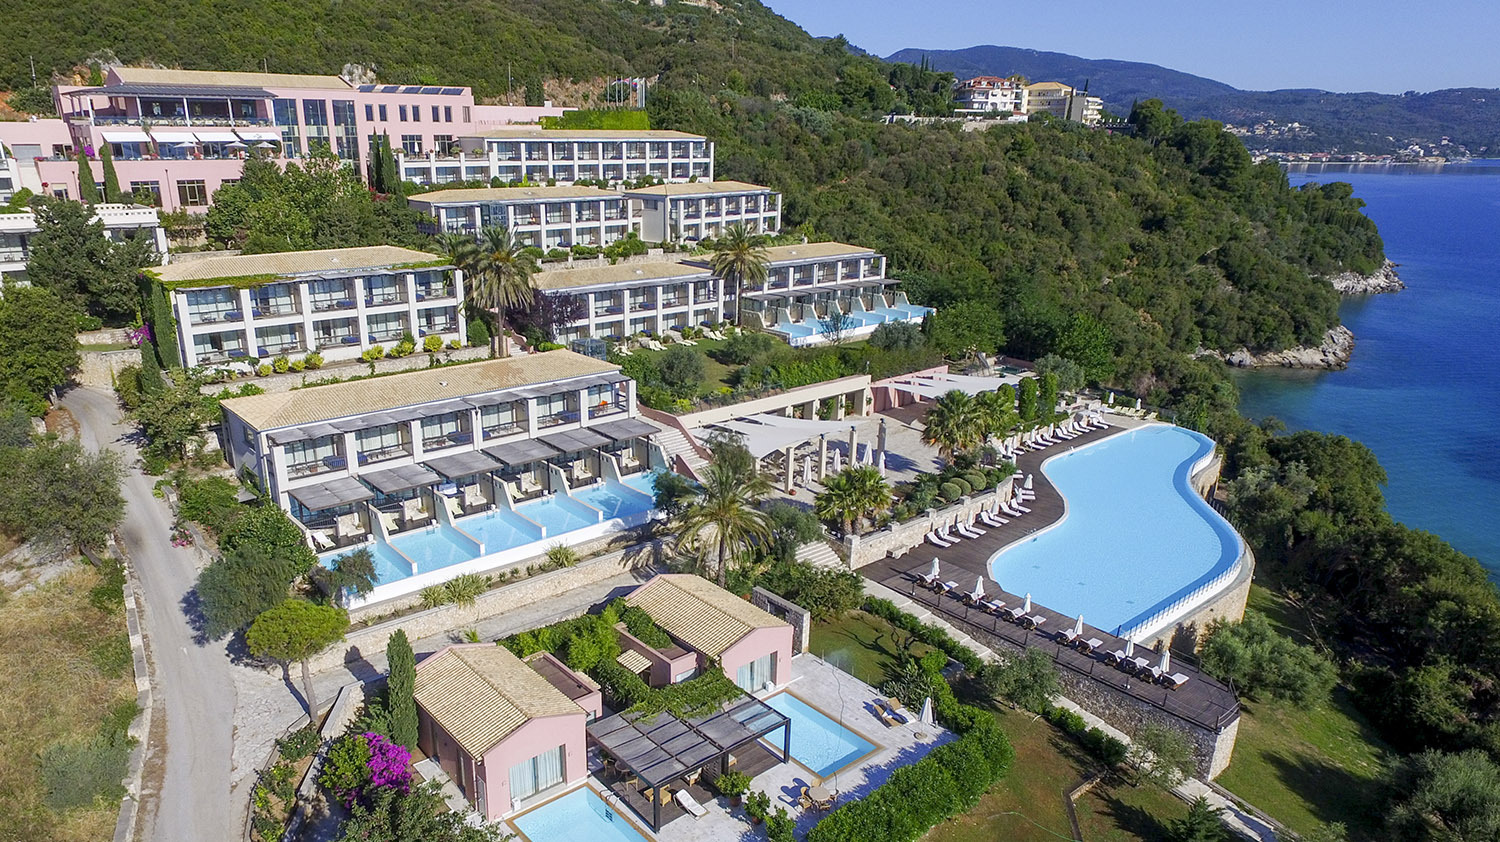 5* Ionian Blue Hotel Bungalows &amp; Spa Resort - Λευκάδα ✦ 2 Ημέρες (1 Διανυκτέρευση) ✦ 2 άτομα + 1 παιδί έως 12 ετών ✦ 8 ✦ 01/07/2022 έως 28/07/2022 και 28/08/2022 έως 11/09/2022 ✦ &lt;strong&gt; Για διαμονή 3 διανυκτερεύσεων ΔΩΡΟ 1 massage!&lt;/strong&gt;